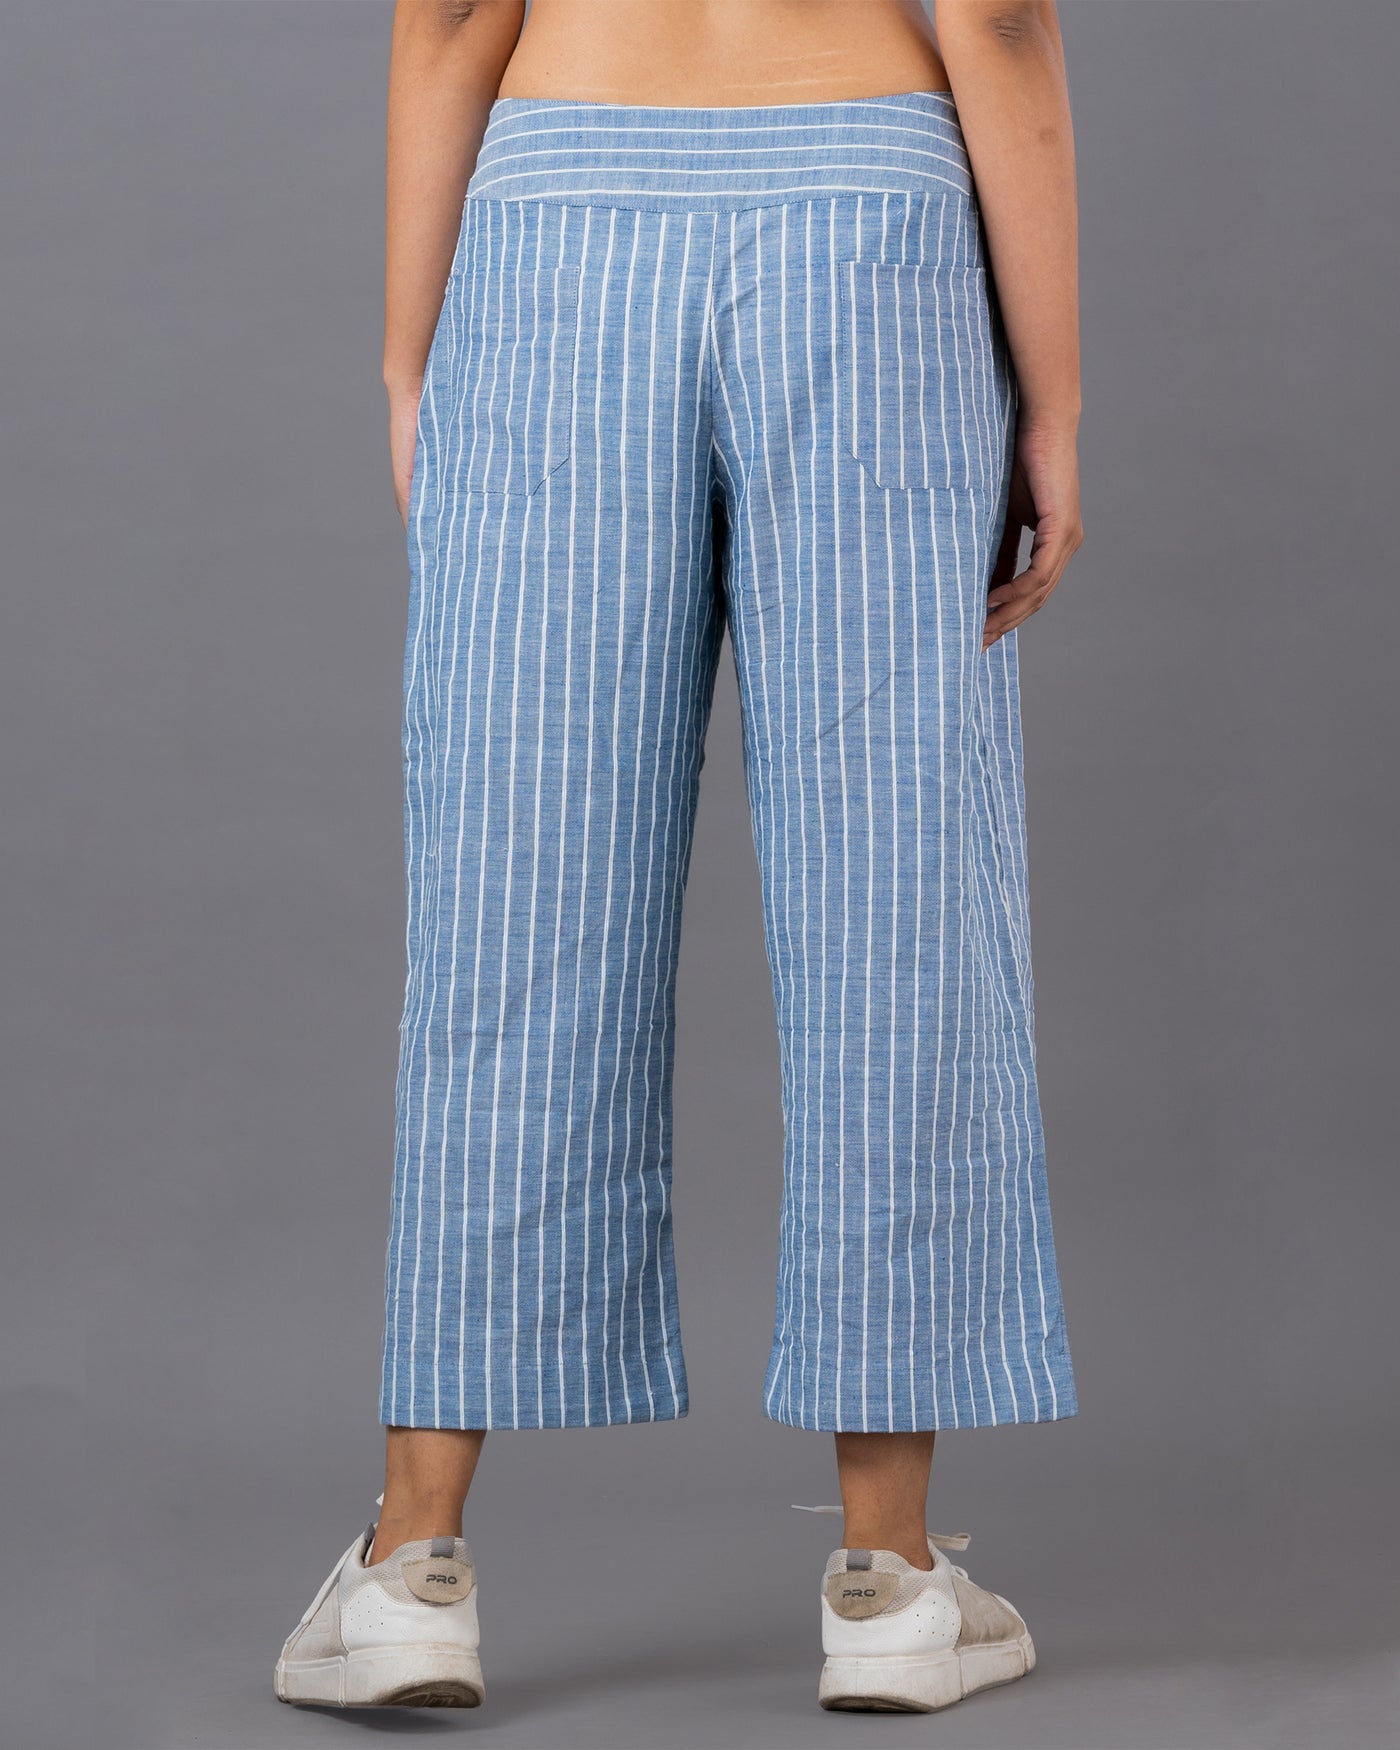 Blue striped wide legged cropped pants